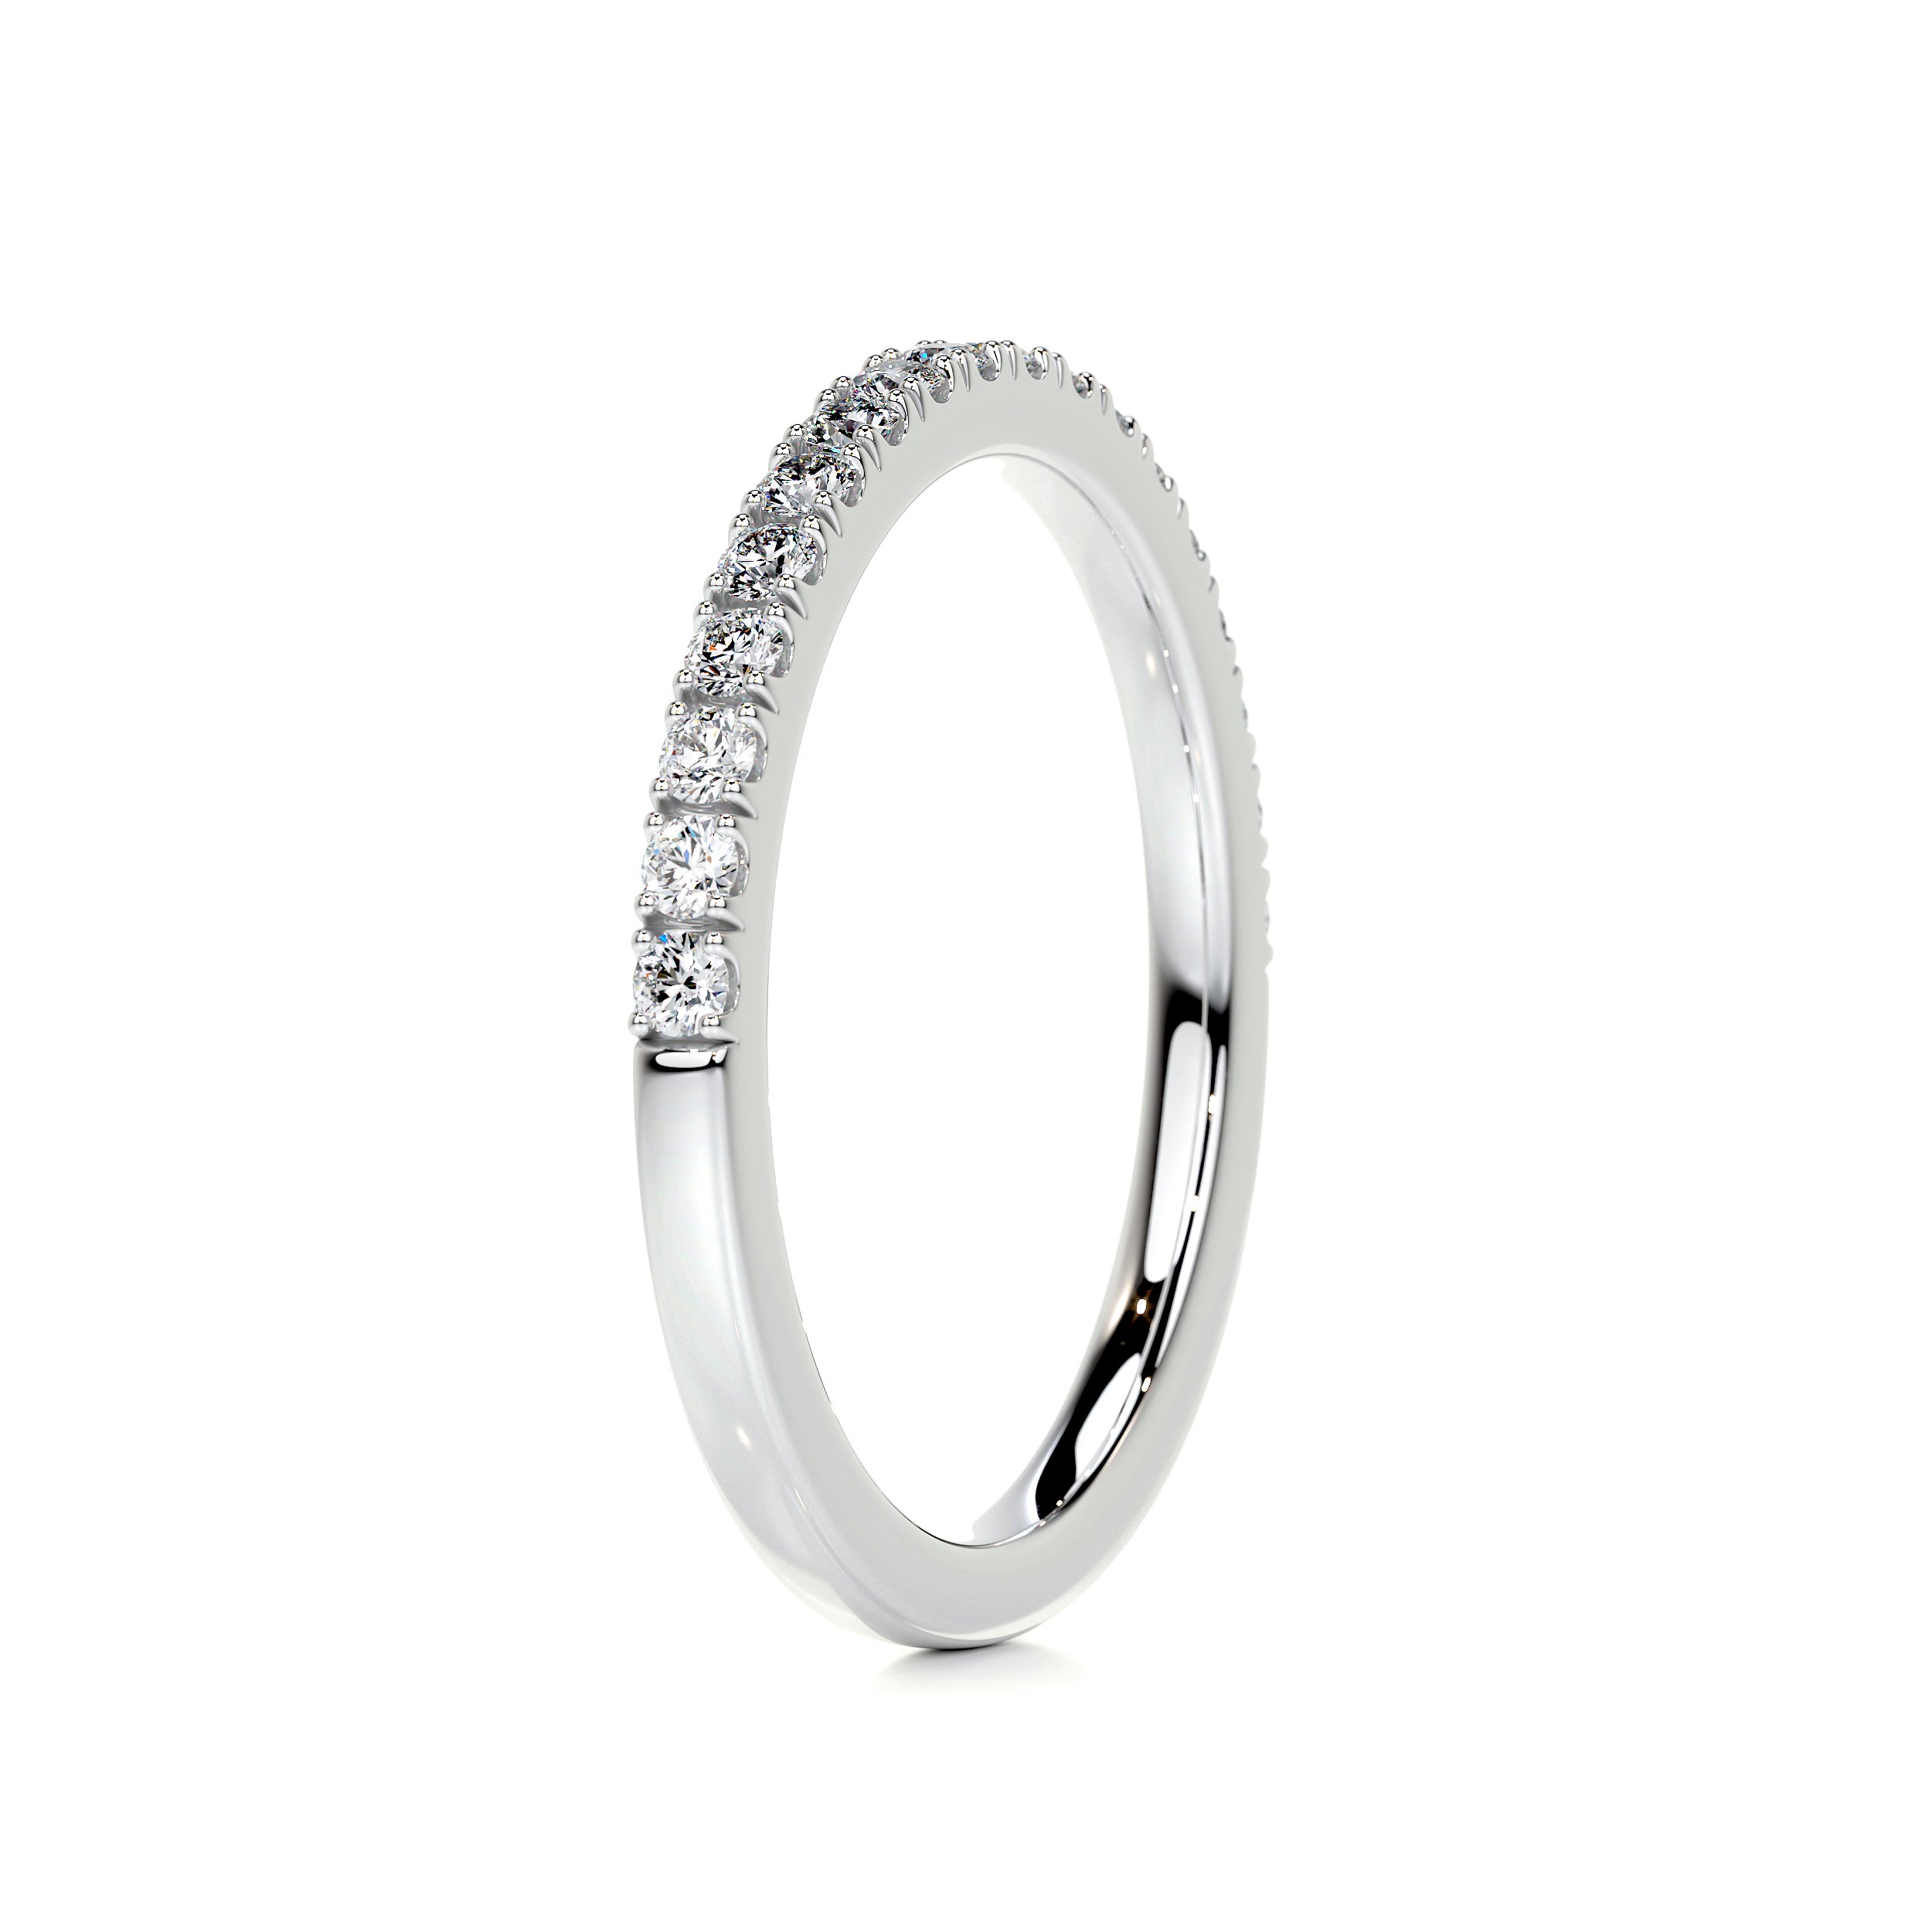 Stephanie Diamond Wedding Ring   (0.3 Carat) - 14K White Gold